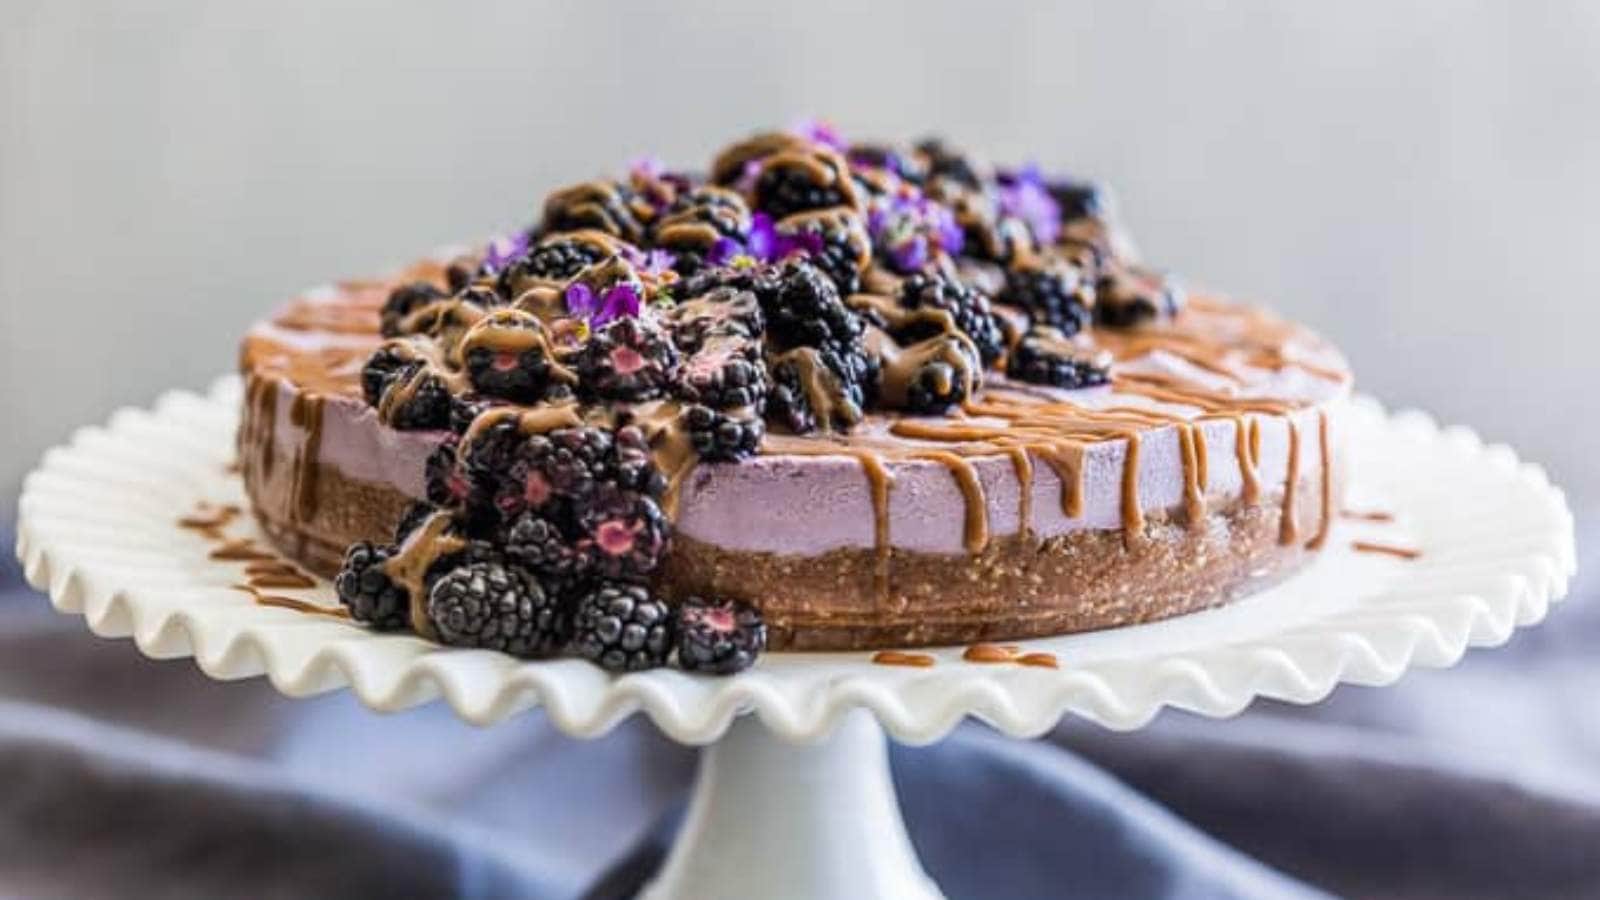 No Bake Caramel Blackberry Cheesecake recipe by Get Inspired Everyday.